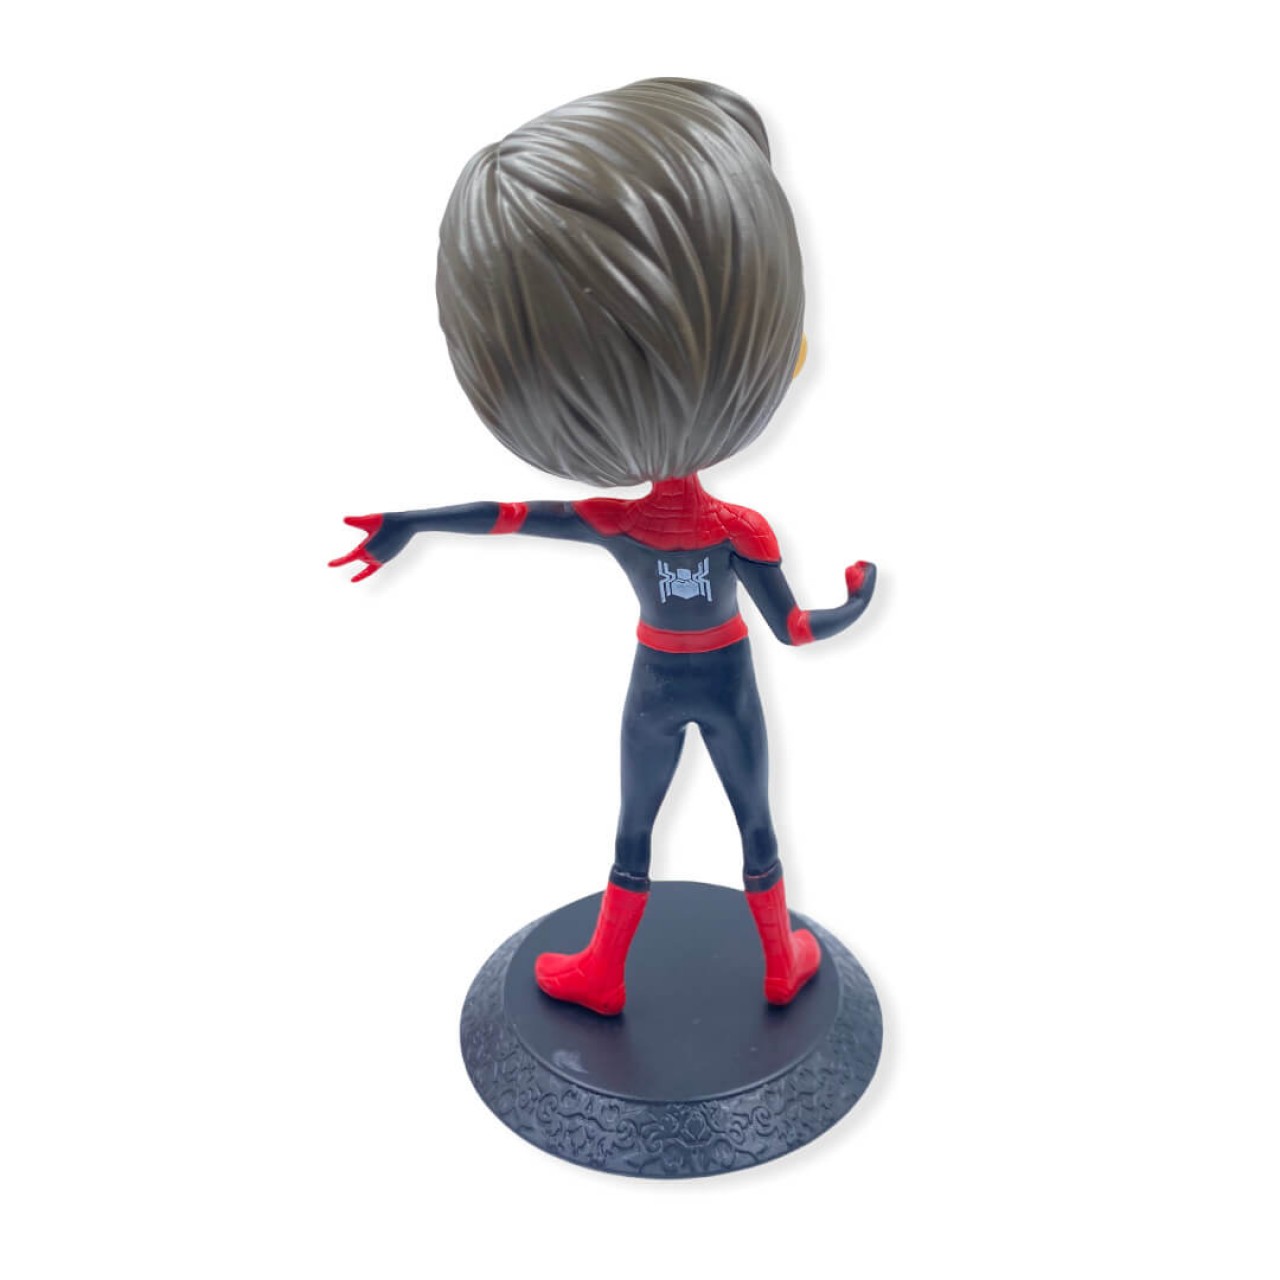 Spider-Man Decorative Action Figure